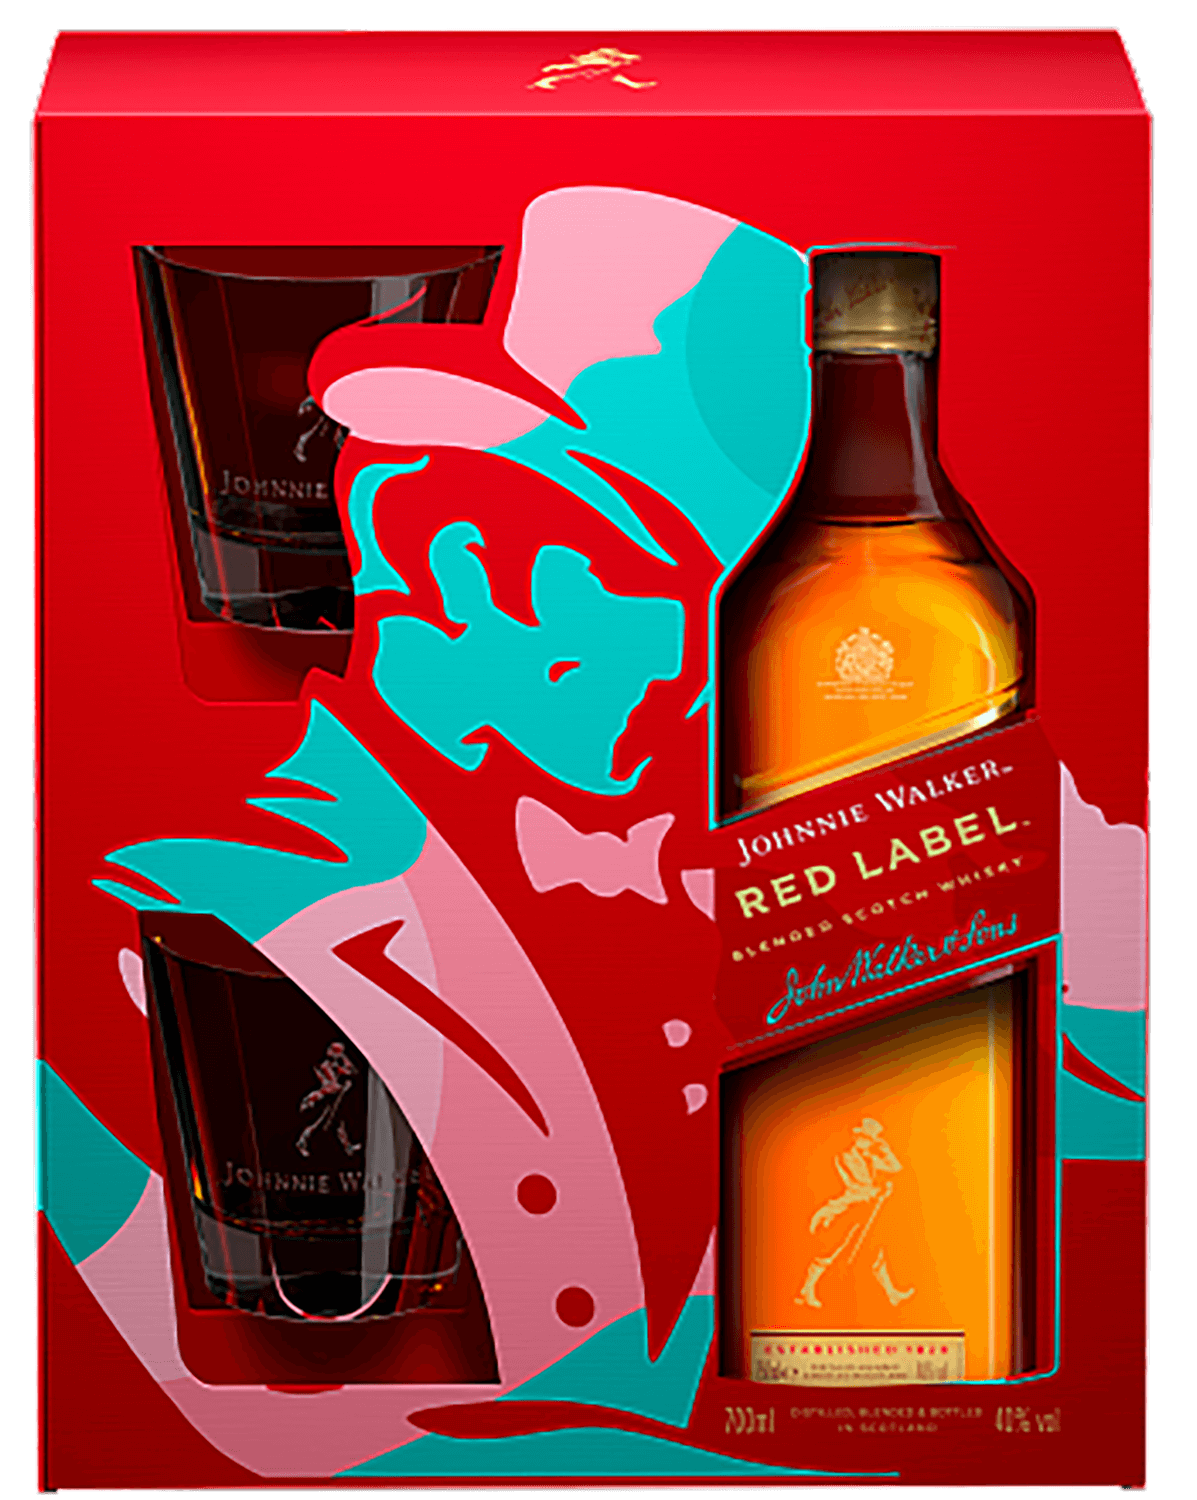 Johnnie Walker Red Label Blended Scotch Whisky (gift box with 2 glasses) jamie stuart blended scotch whisky 3 y o gift box with 2 glasses